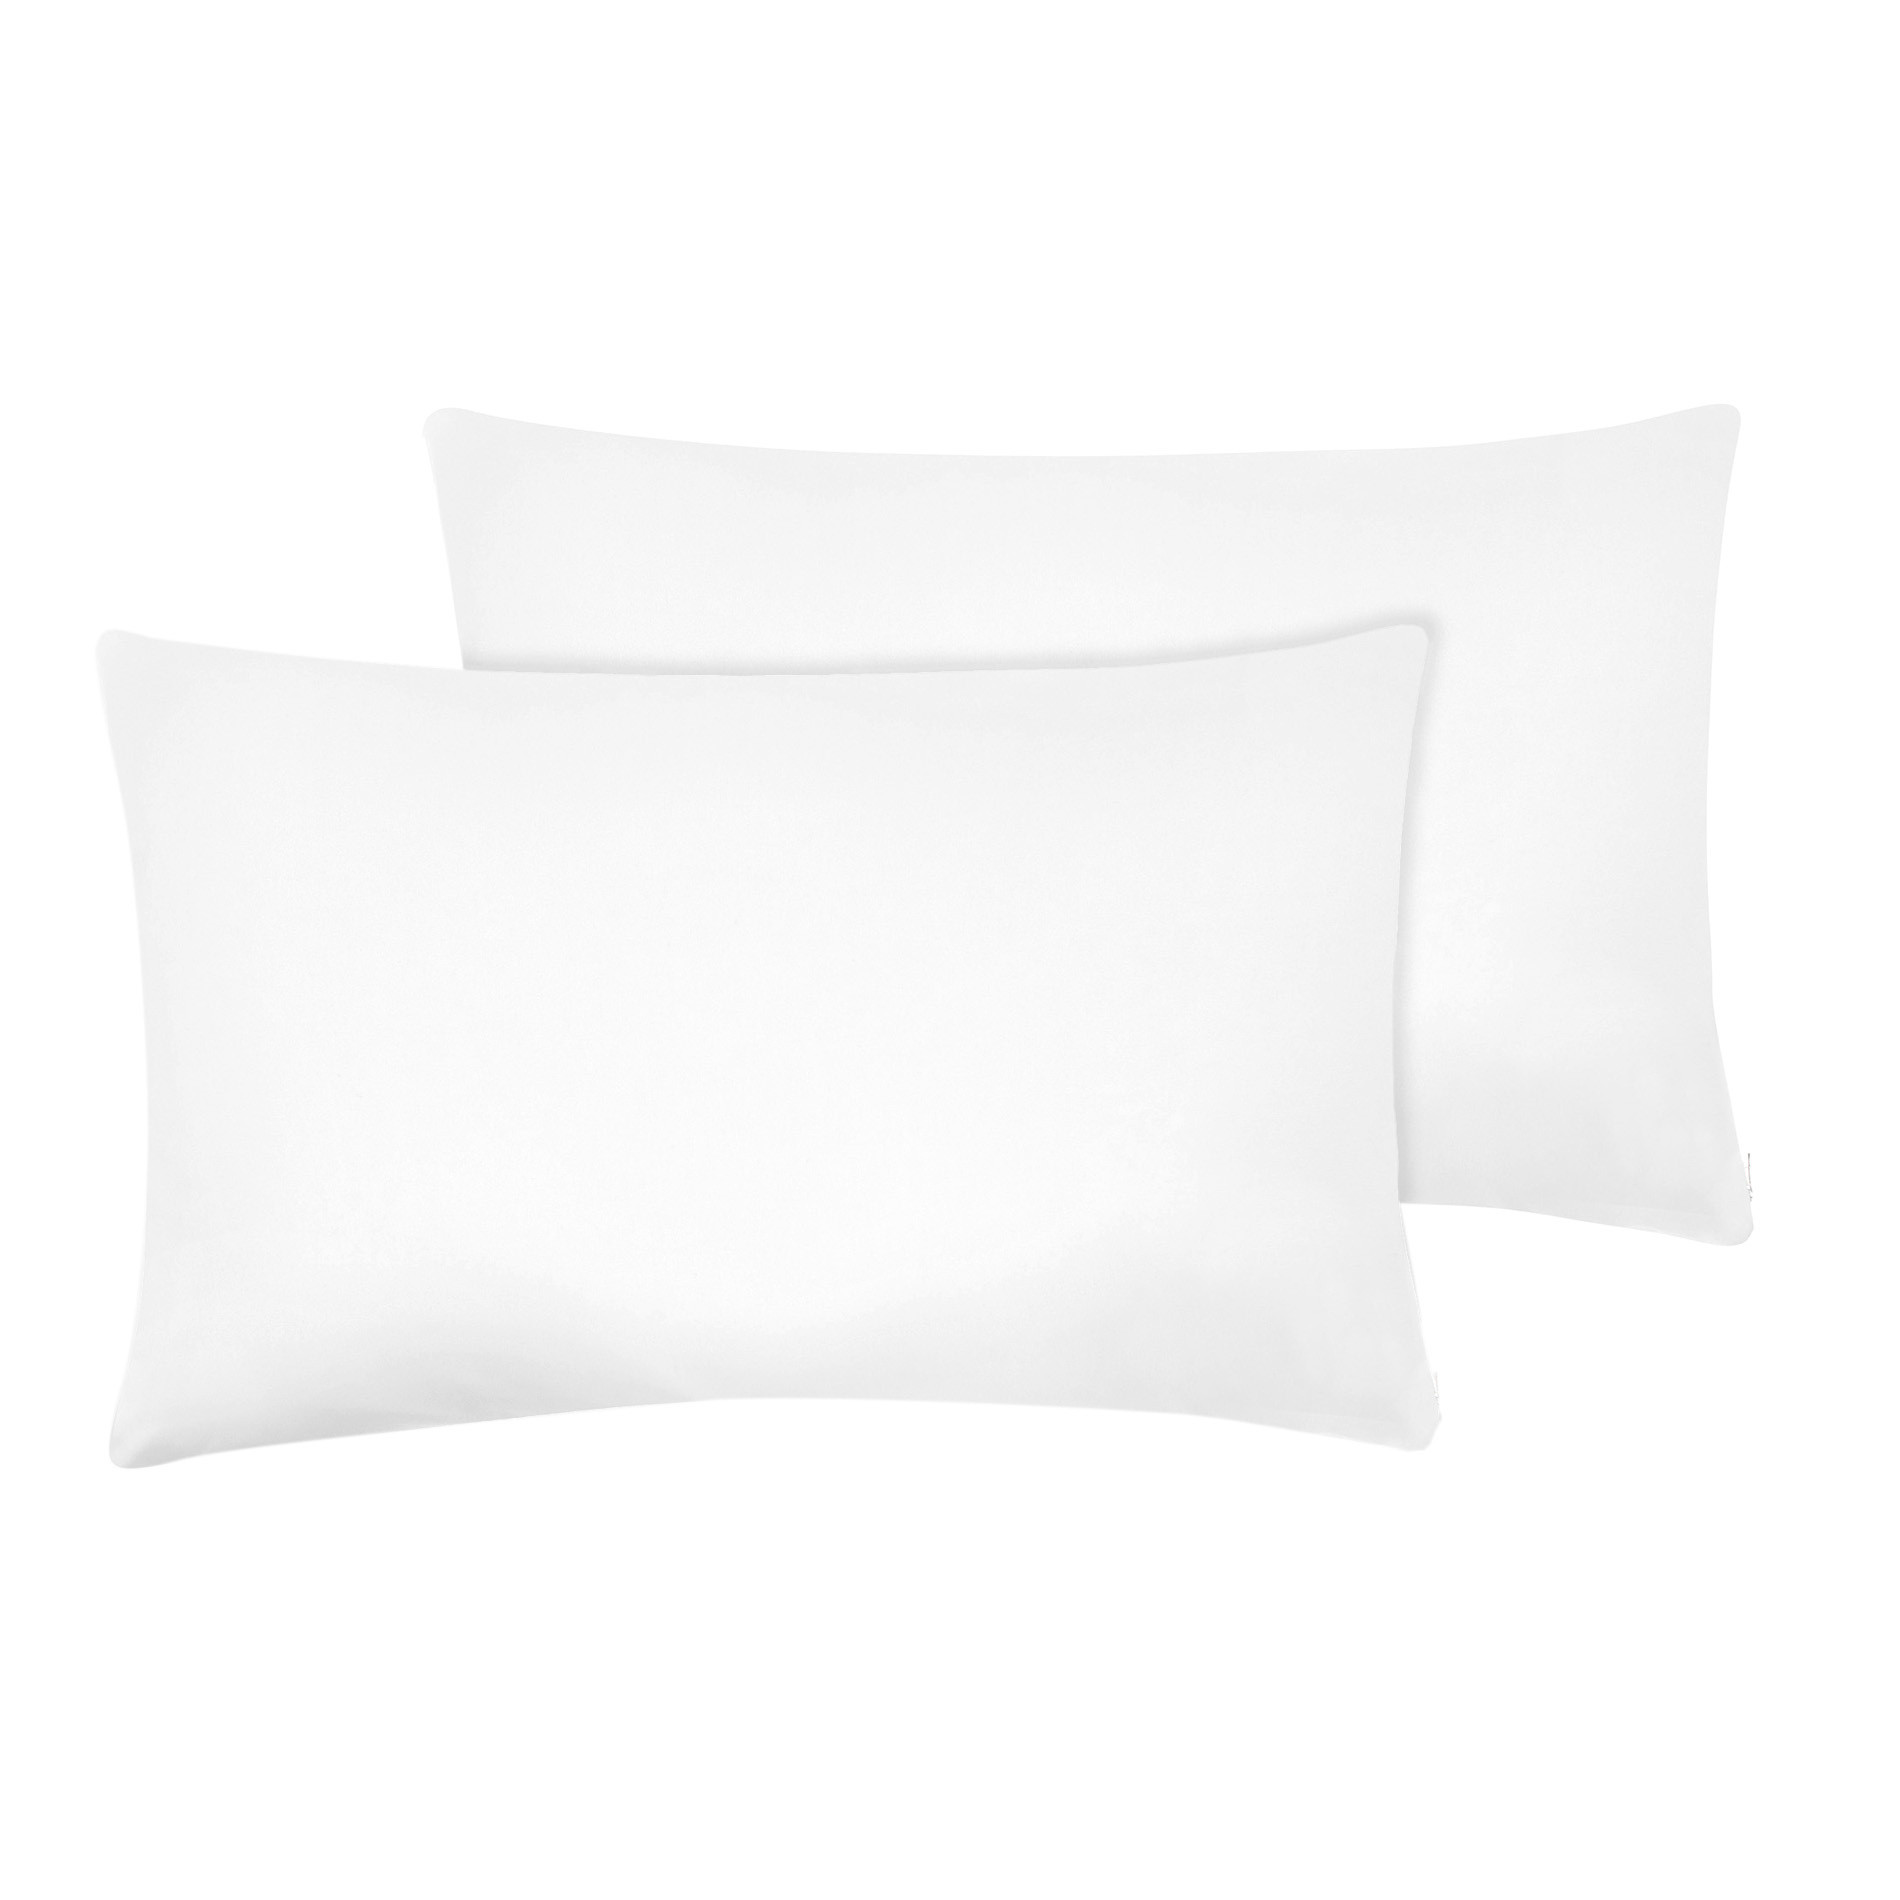 Ergonomic pillow and cotton pillowcase set, White, large image number 0